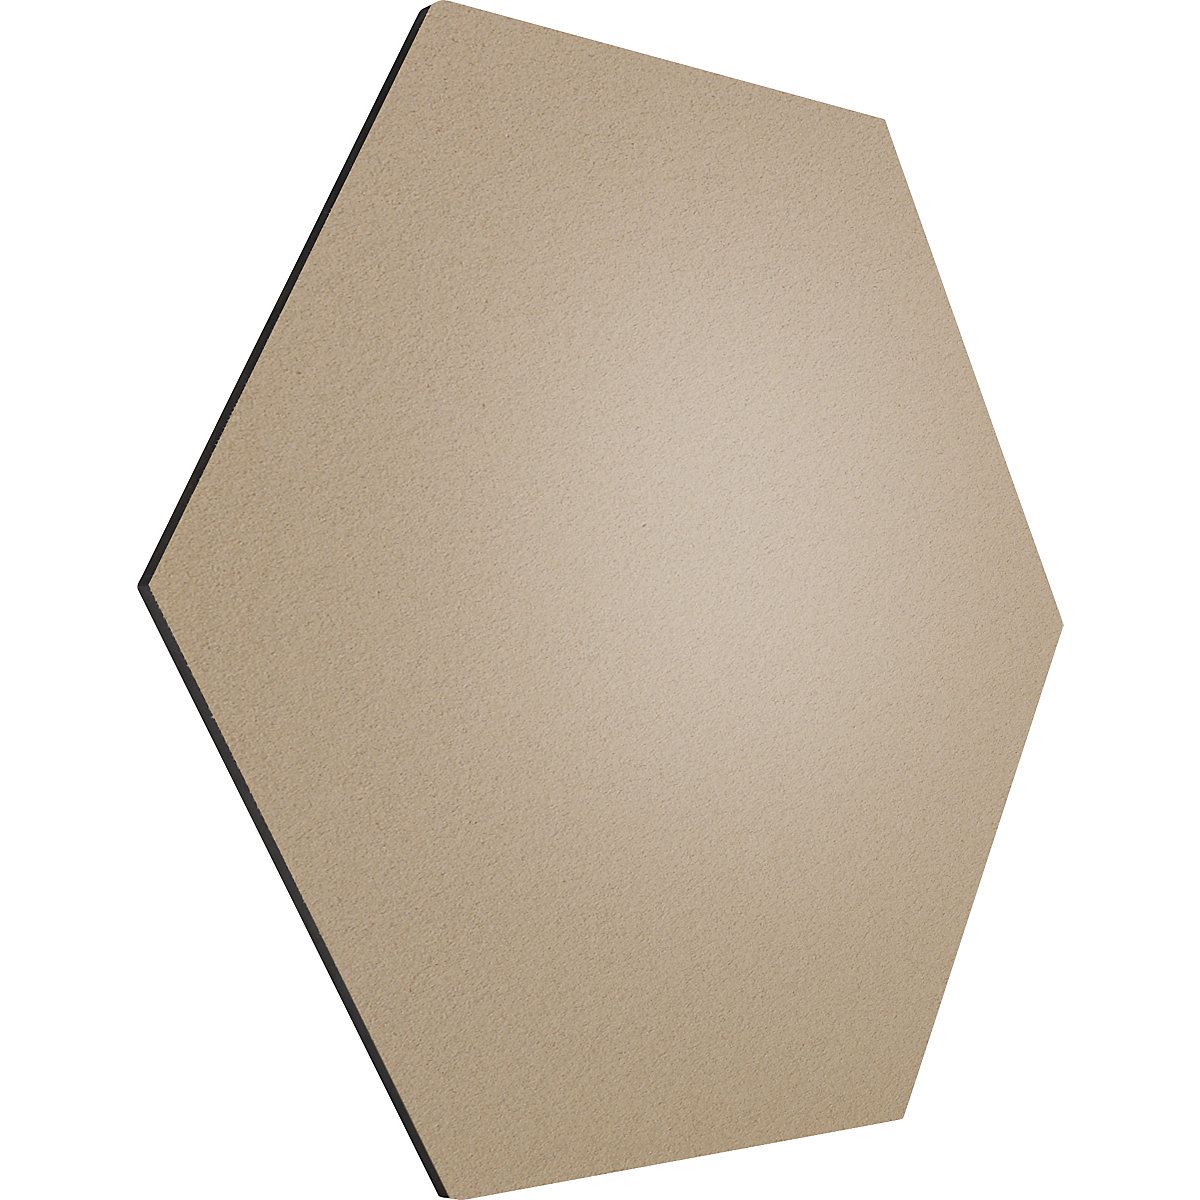 Hexagonal designer pin board – Chameleon, cork, WxH 600 x 600 mm, beige-35